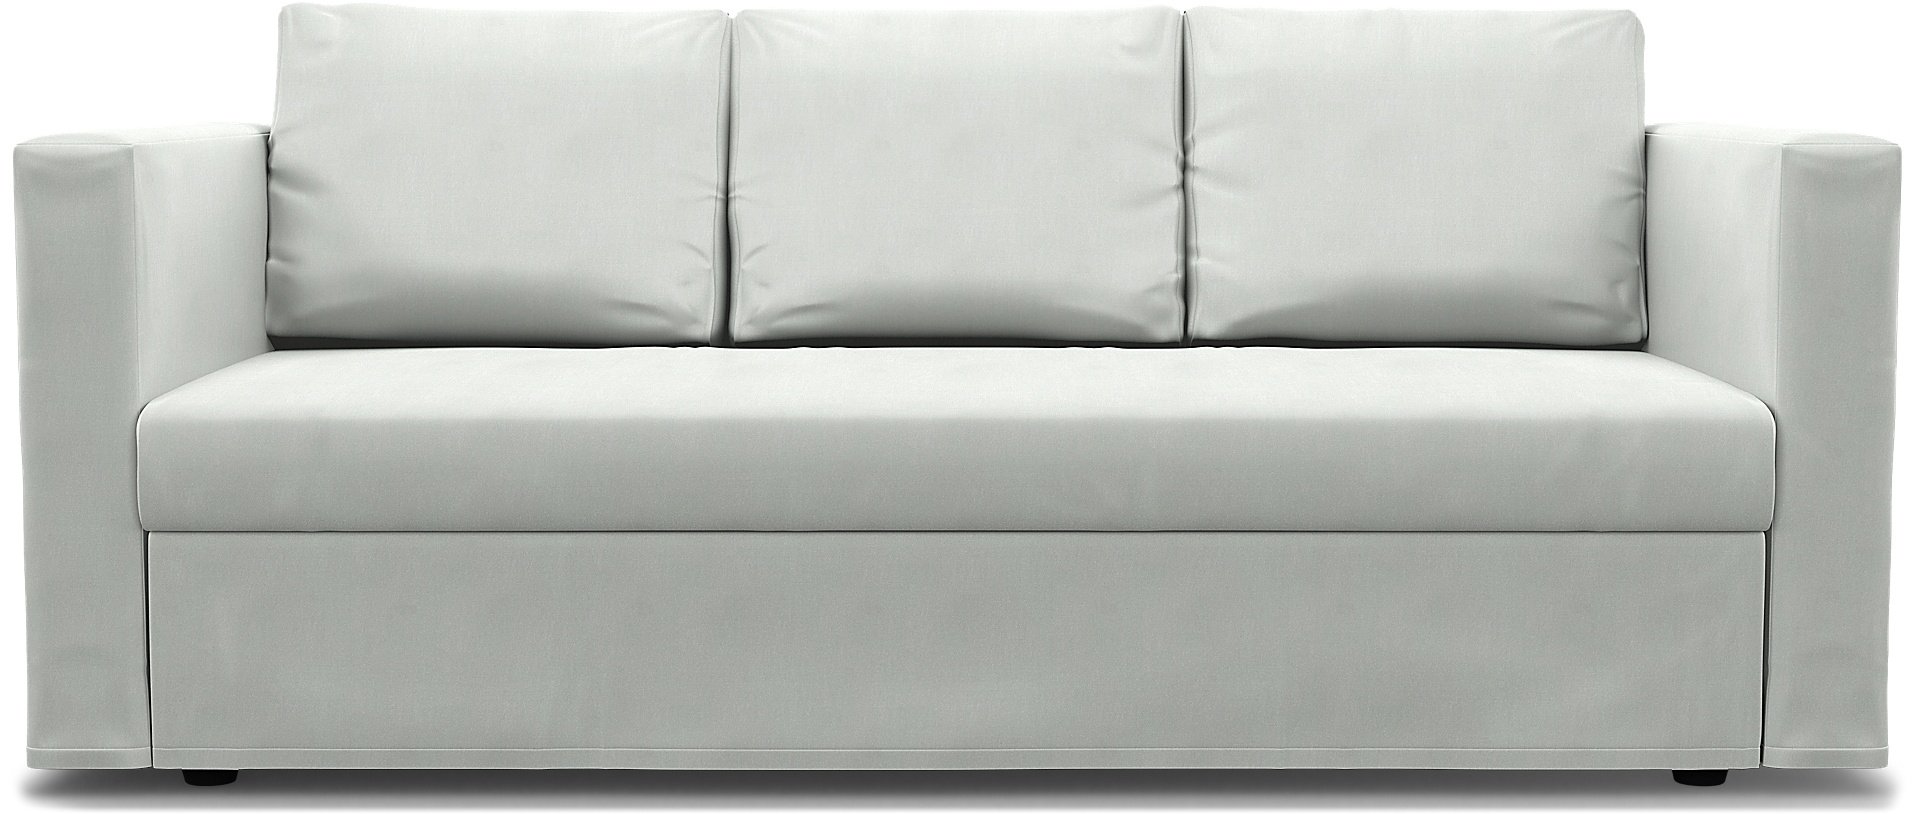 IKEA - Friheten 3 Seater Sofa Bed Cover, Silver Grey, Linen - Bemz